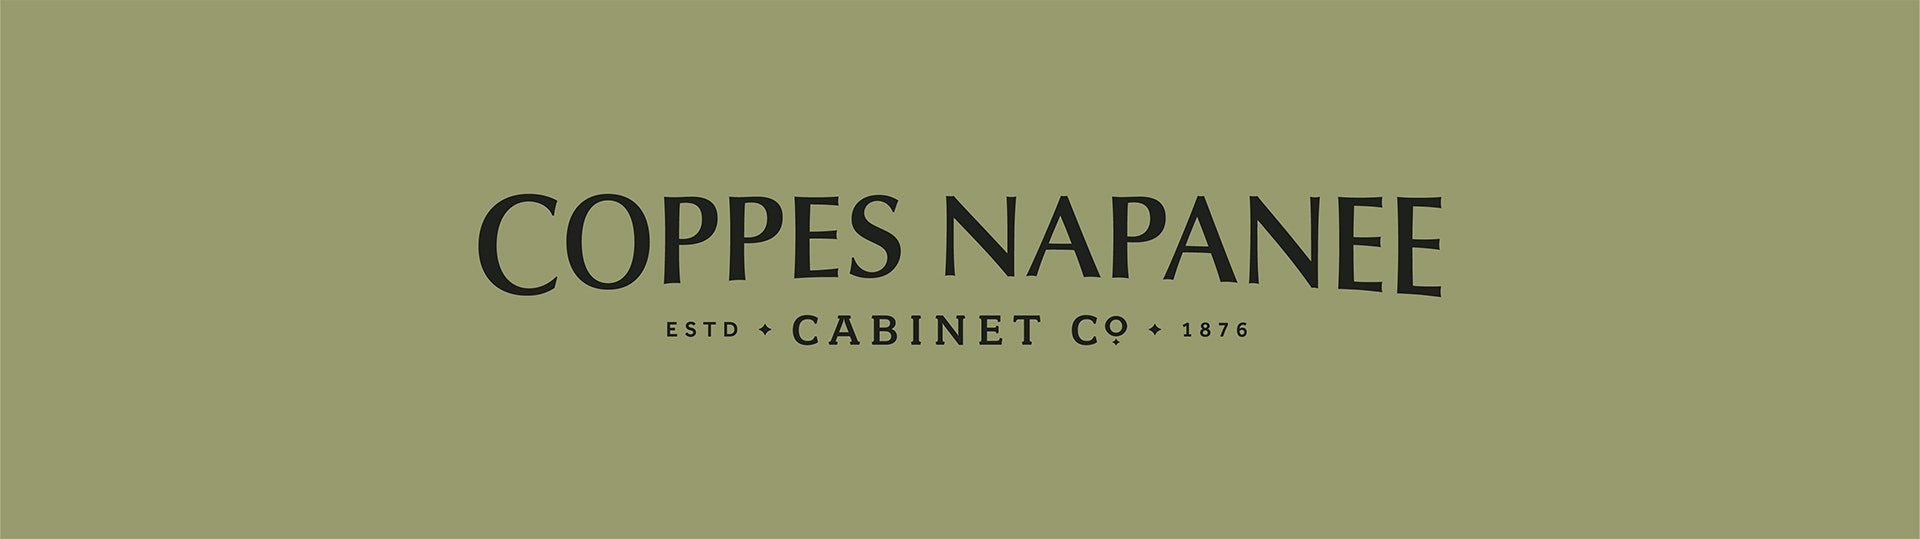 Coppes Napanee Logo